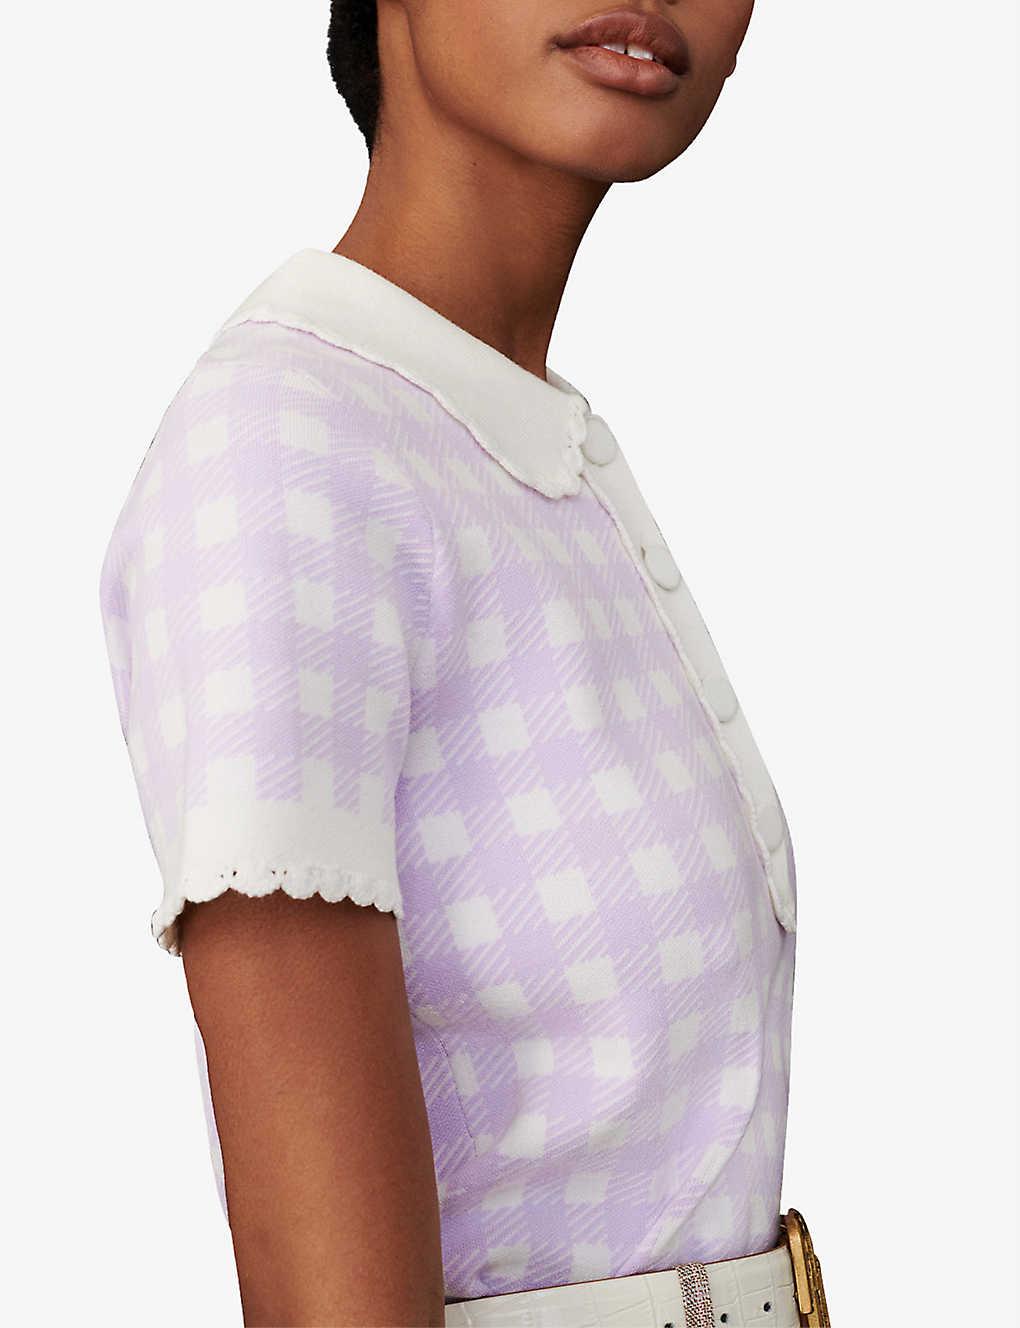 Maje Women's Sparkly Knit Polo Shirt - Pale Pink - Size Large